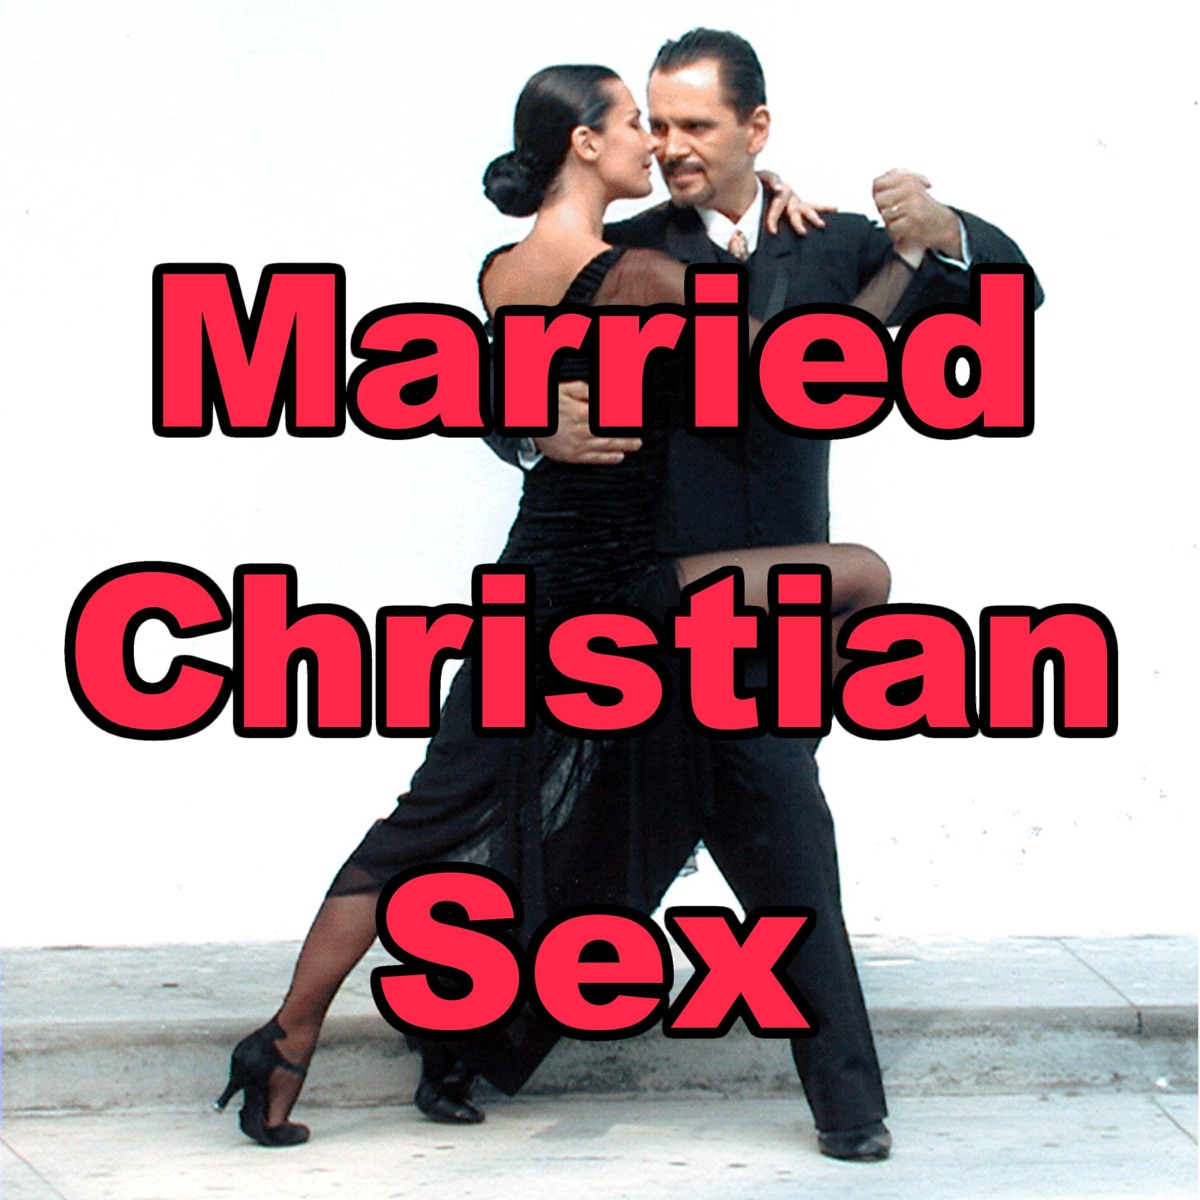 Sexy Adult Jenga - Married Christian Sex